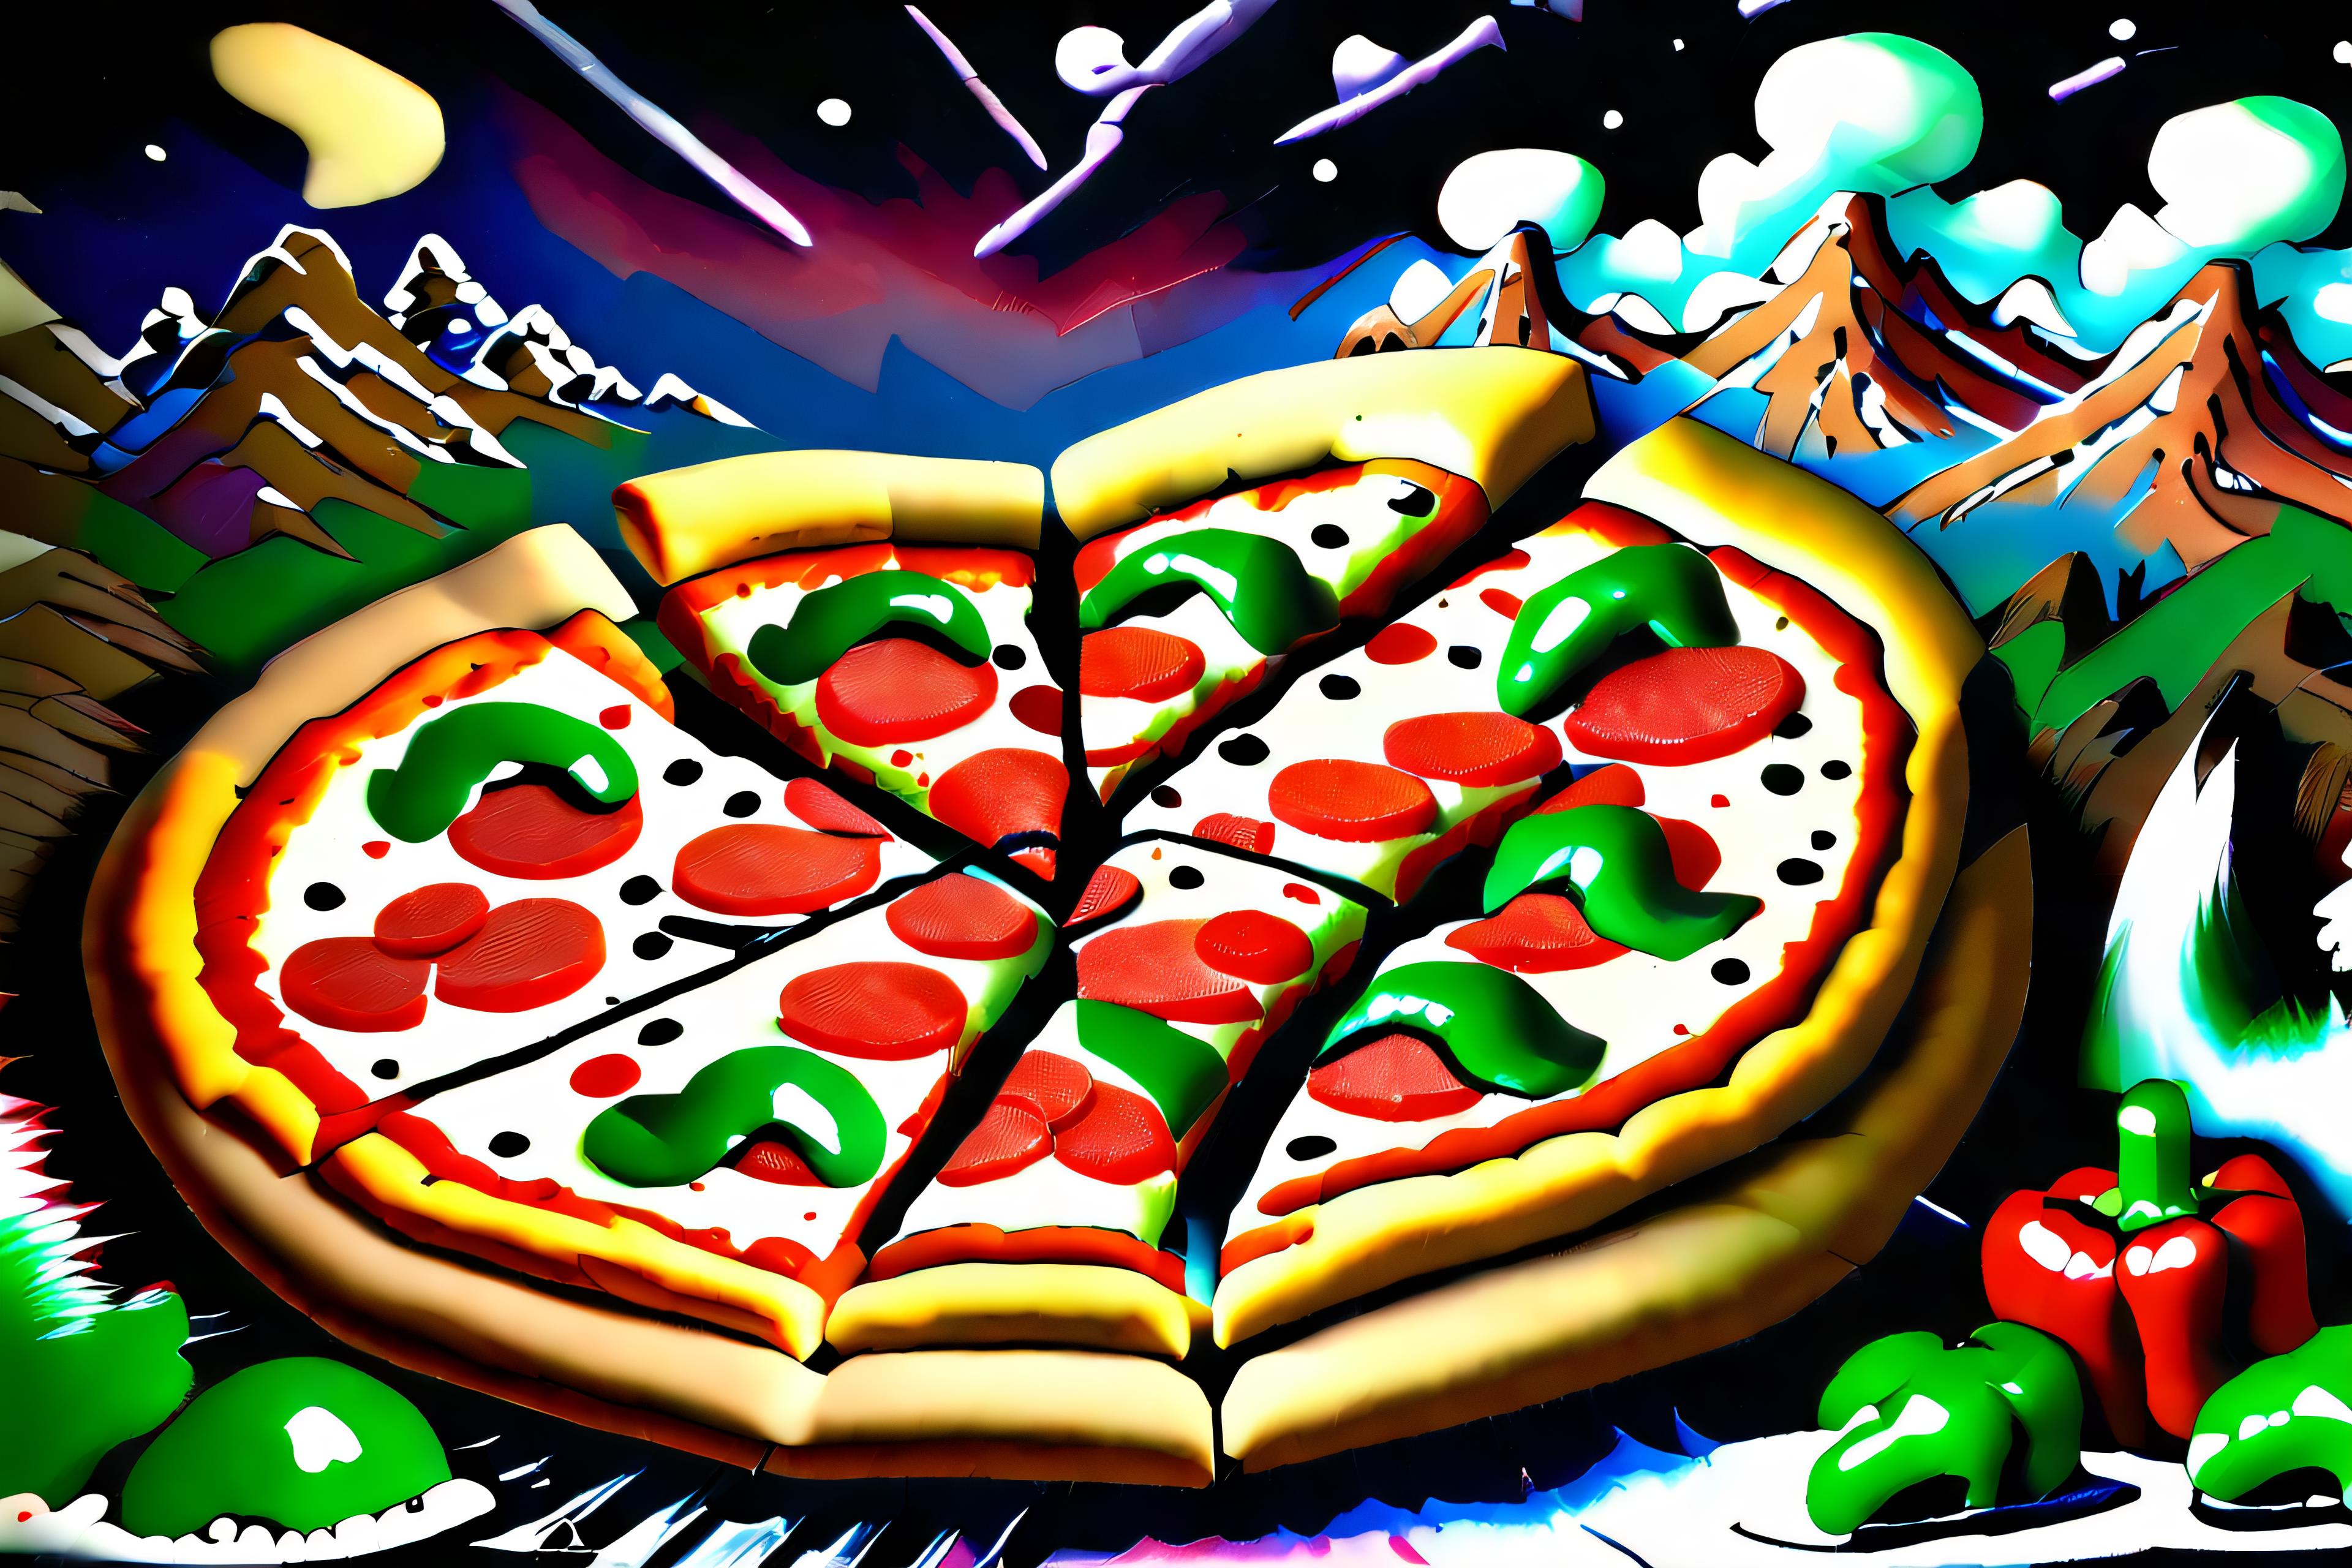 Pizza Dreams image by patricktoba